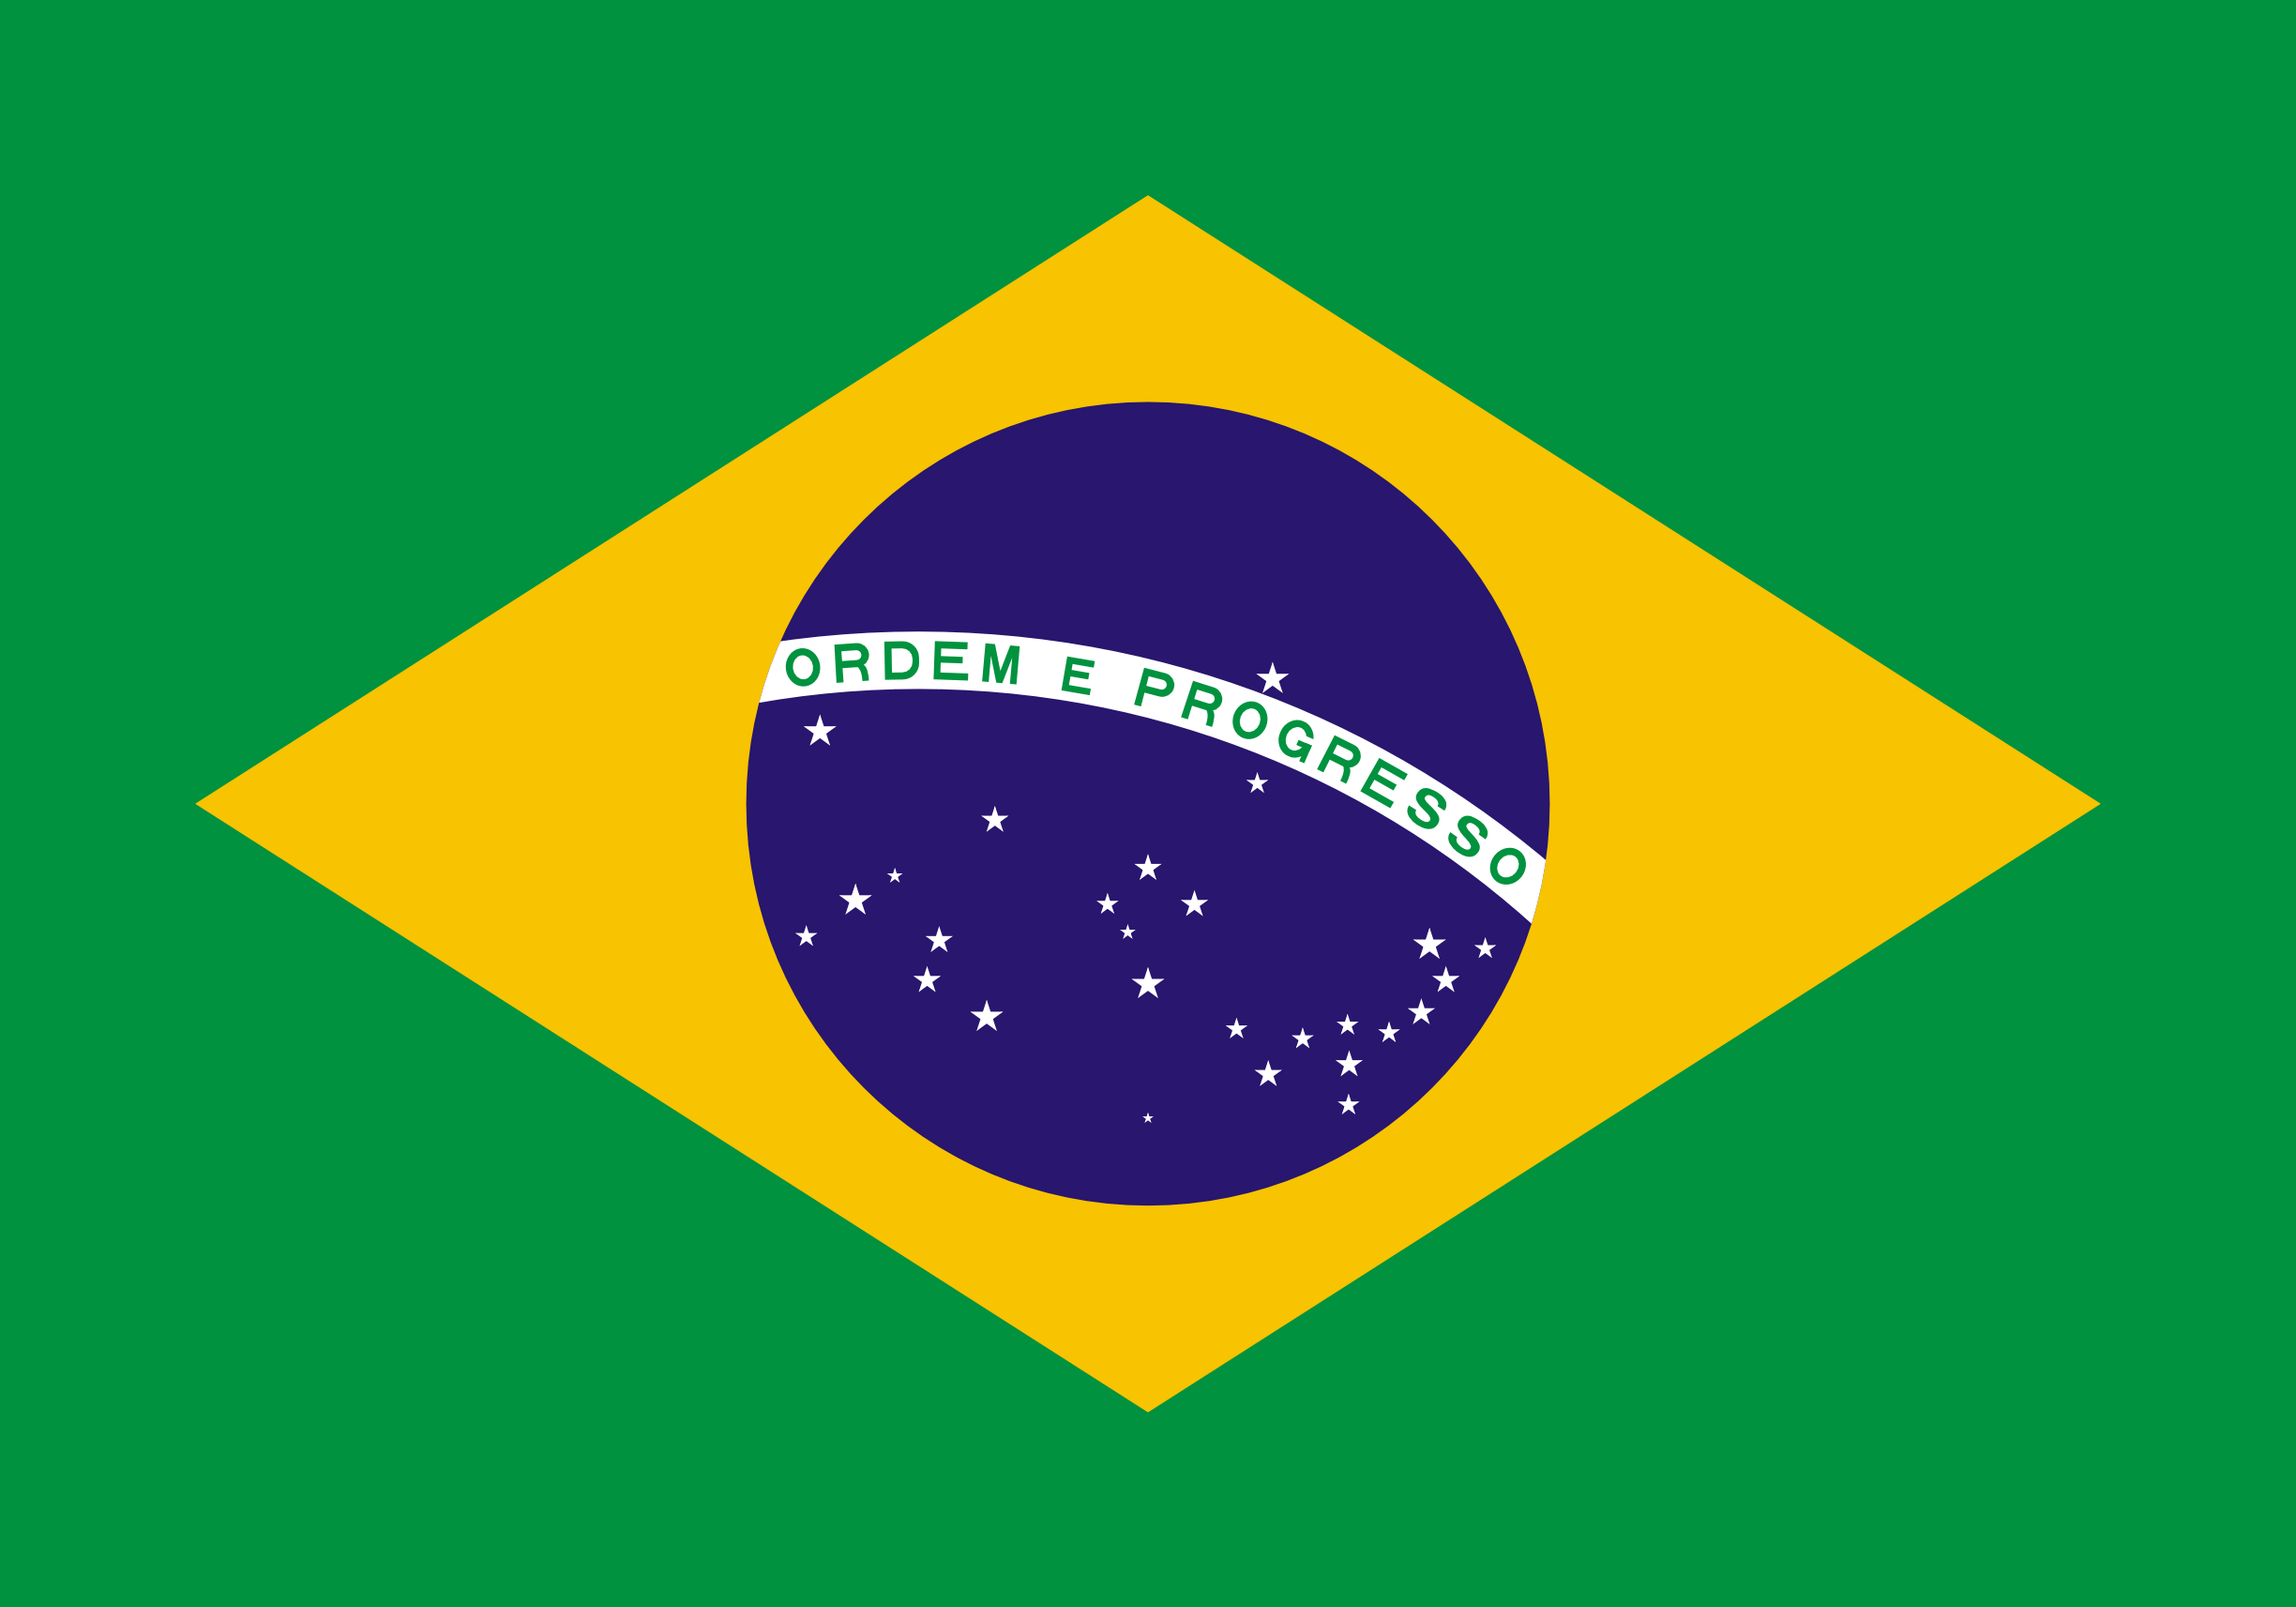 la imagen muestra la bandera de brazil